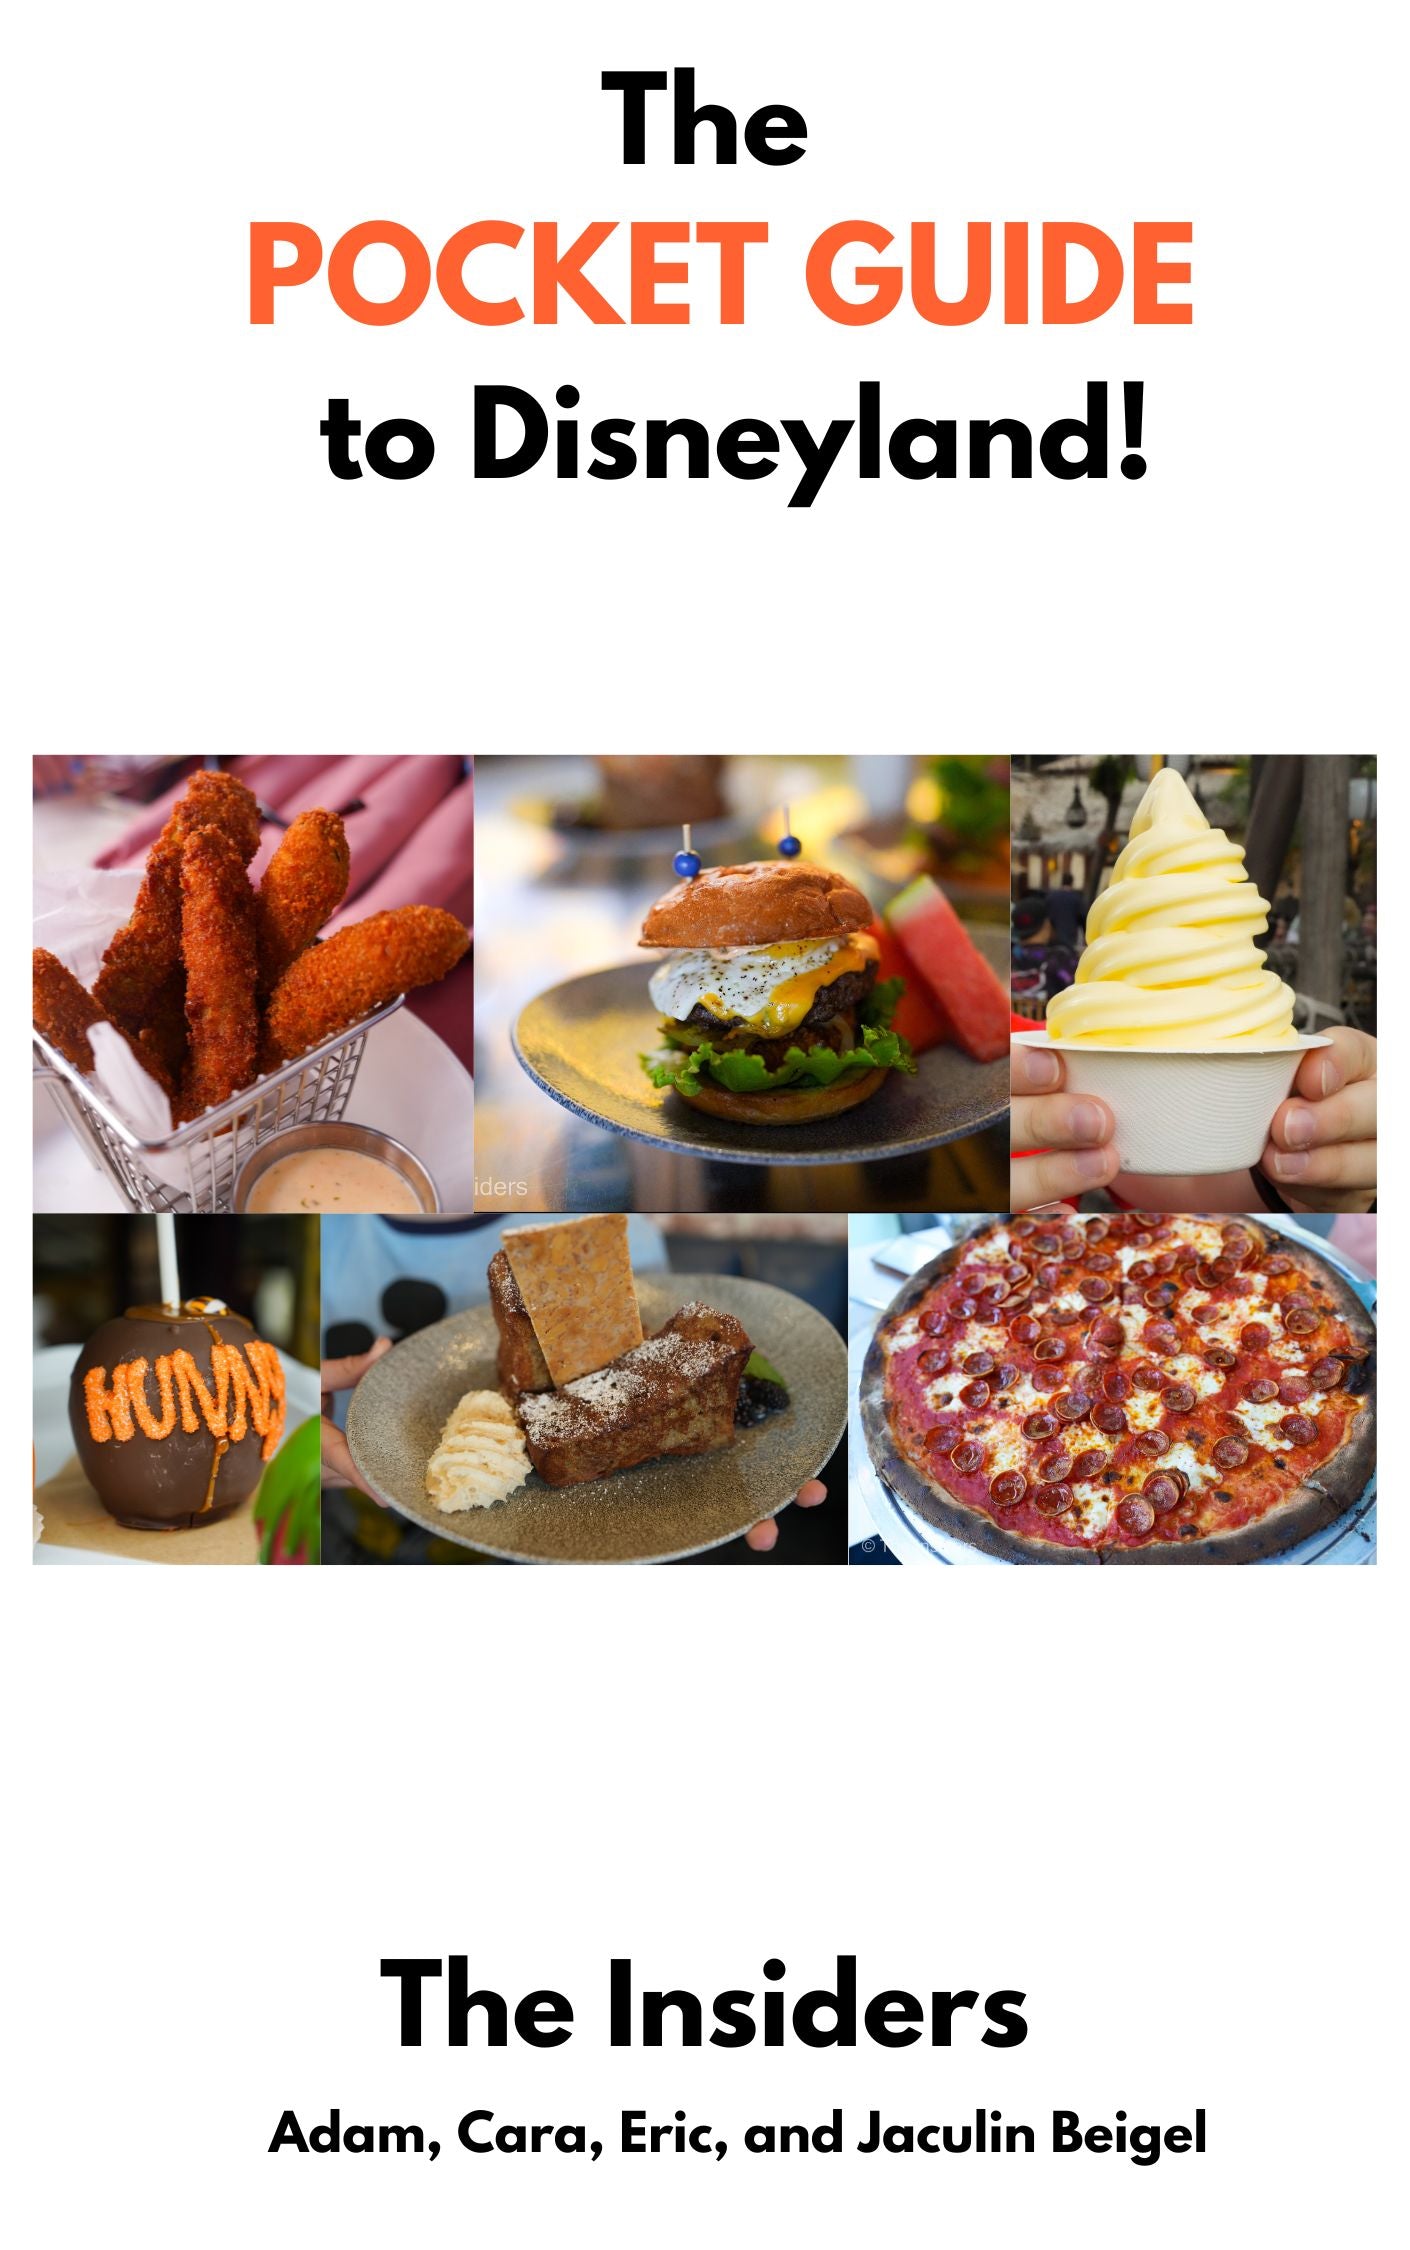 Pocket Guide to Disneyland Restaurants